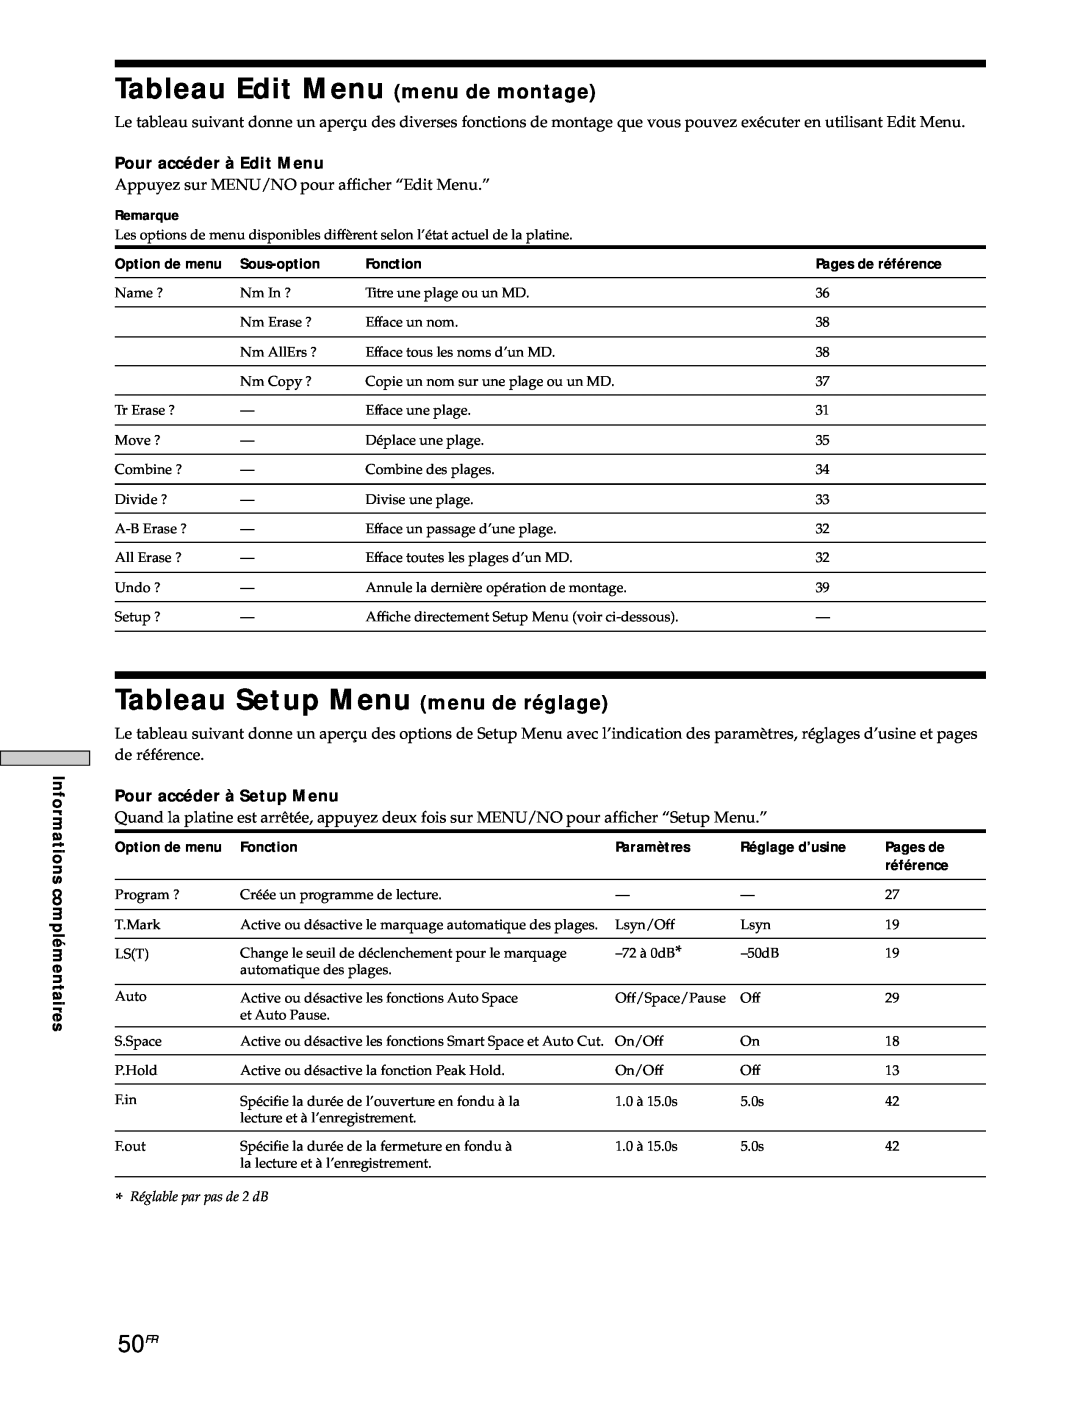 Sony MDS-JE530 manual Tableau Edit Menu menu de montage, Tableau Setup Menu menu de réglage, 50FR 